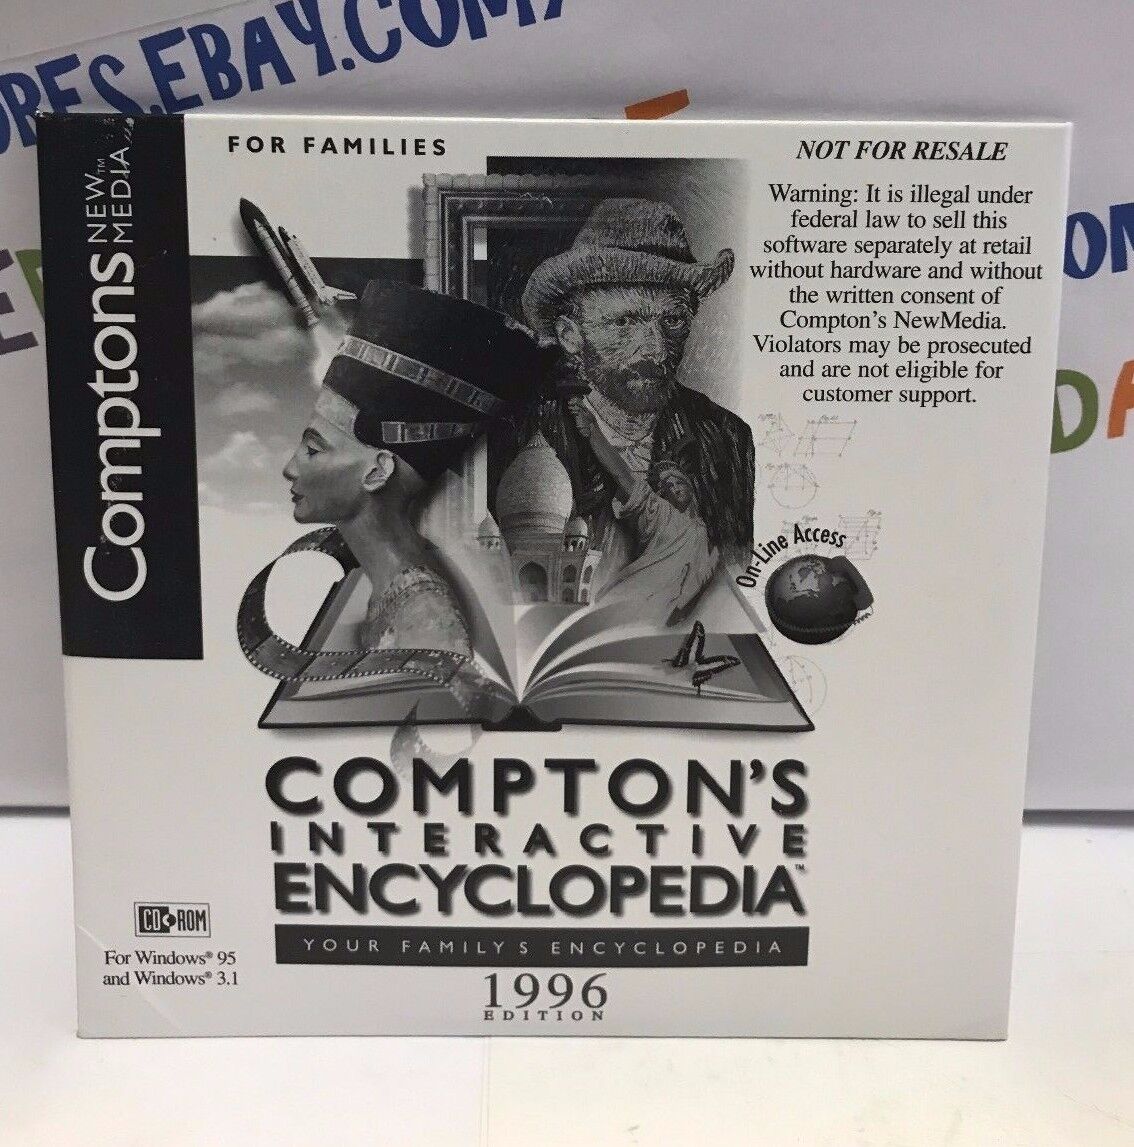 Comptons NEW MEDIA. COMPTON'S INTERACTIVE ENCYCLOPEDIA. 1996. LIKE NEW.